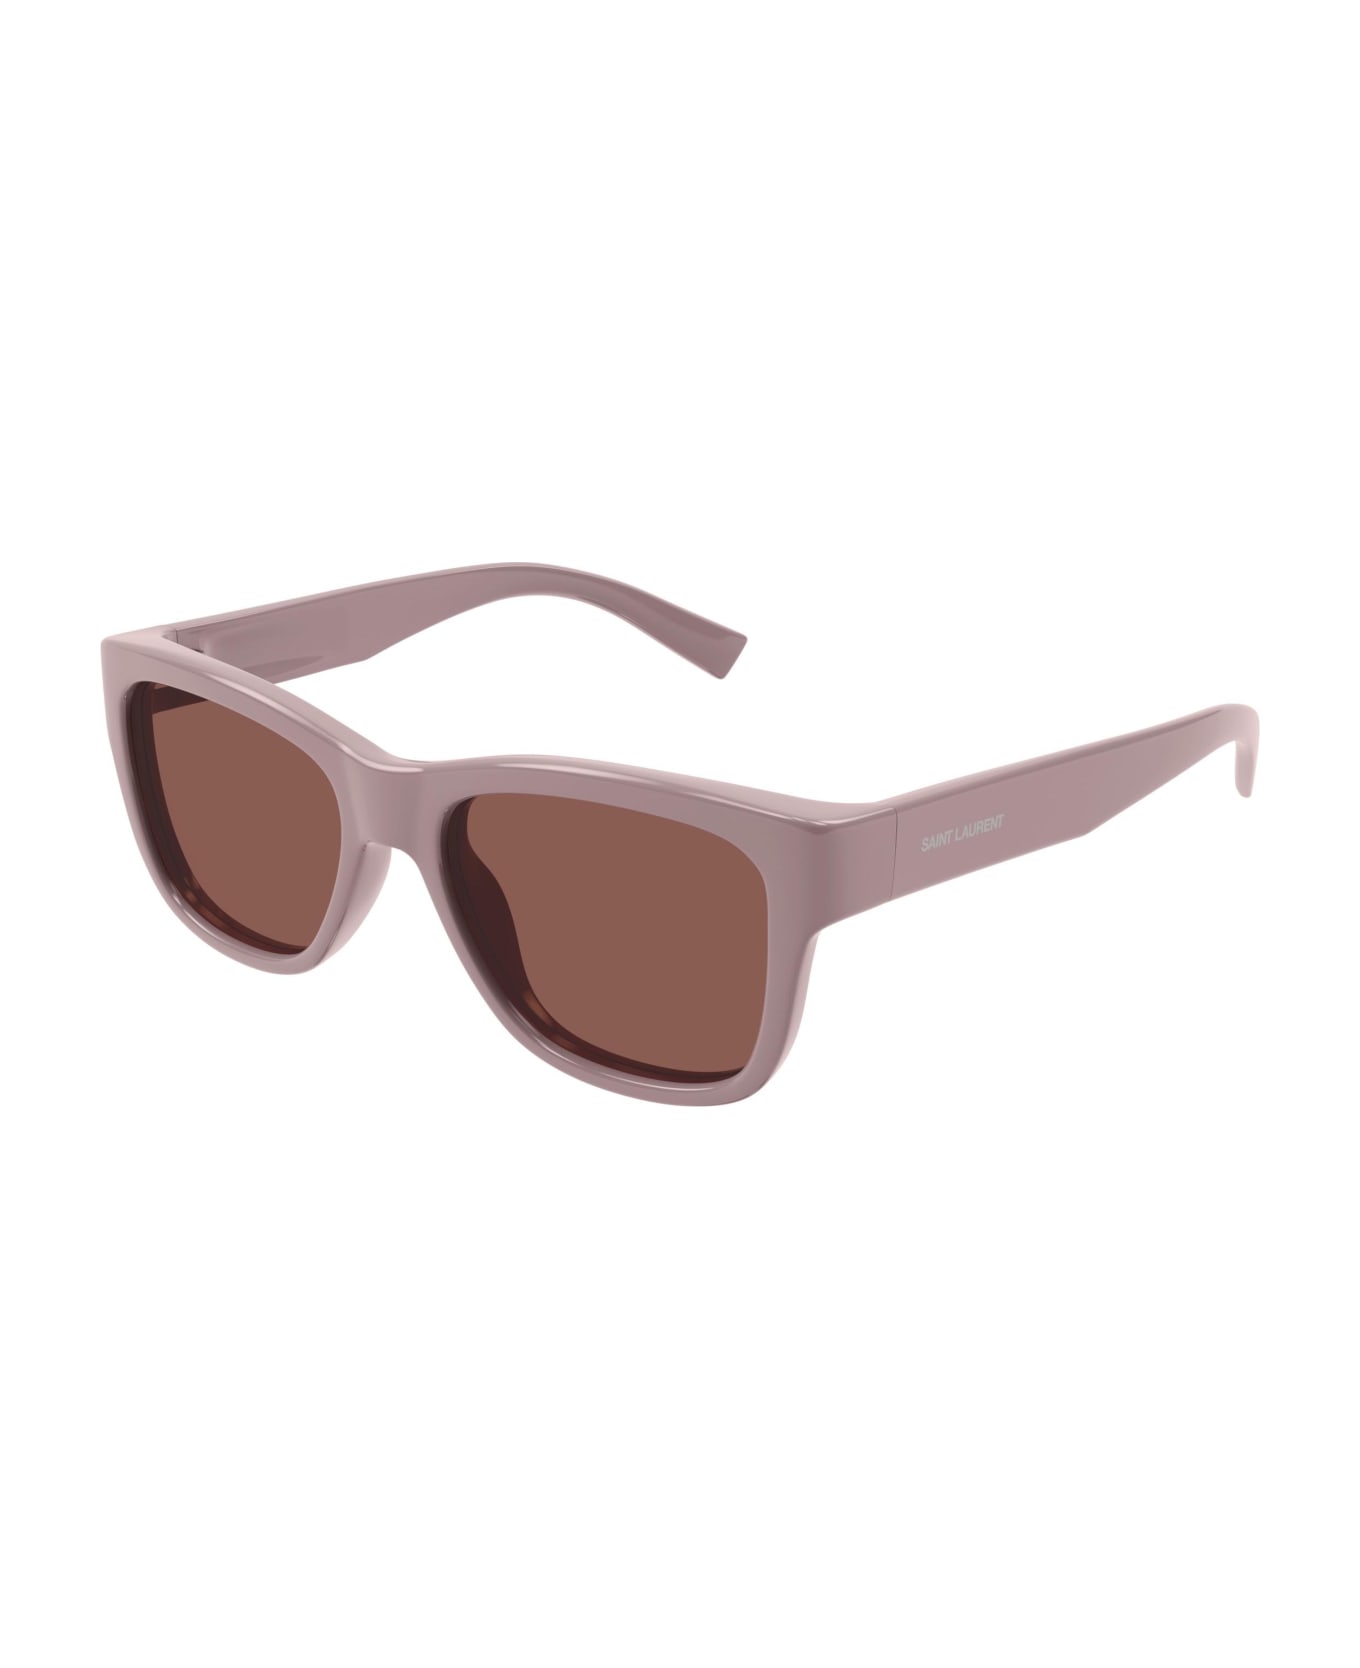 Saint Laurent Eyewear Sunglasses - Rosa/Marrone サングラス